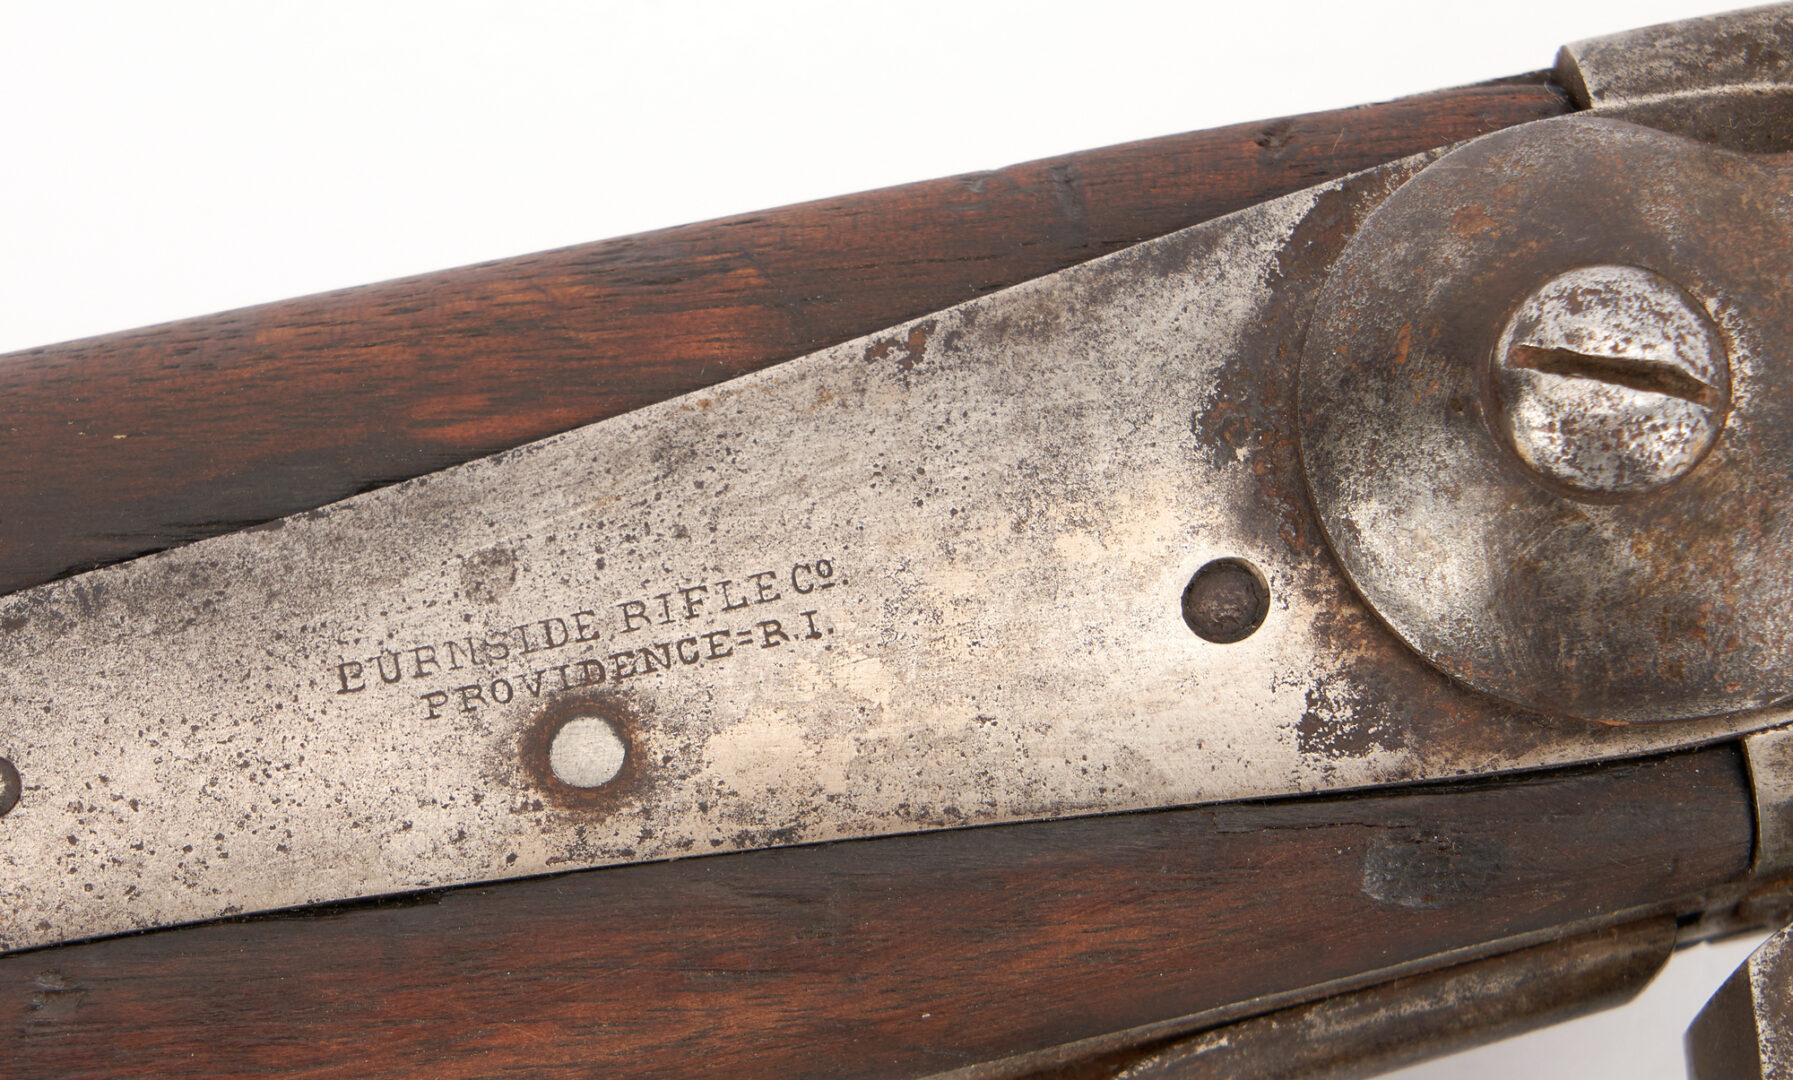 Lot 676: Civil War Burnside Rifle Co. Model 1864 Carbine, .54 cal.